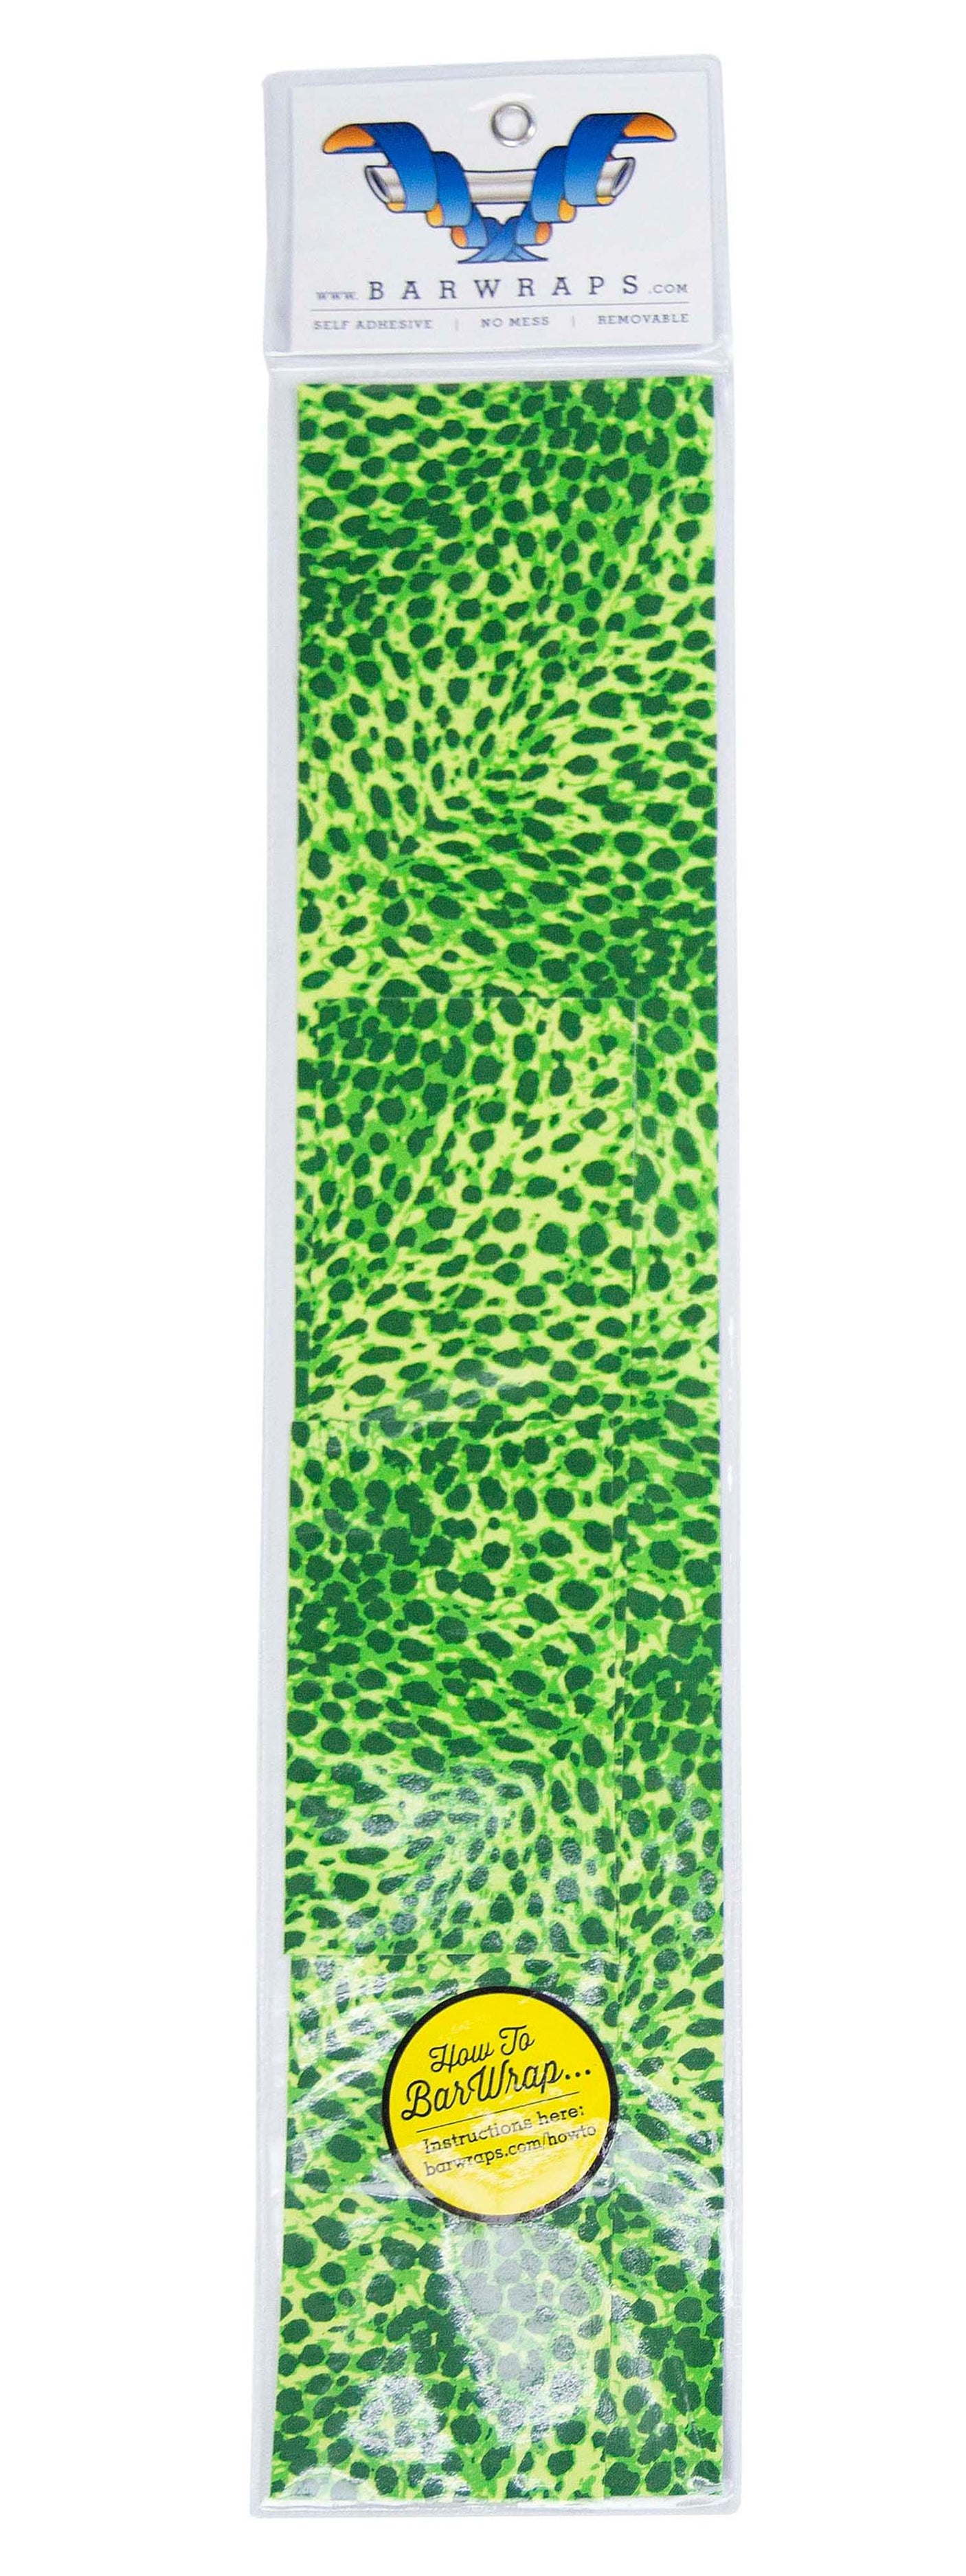 BarWraps Leopard Print - Green